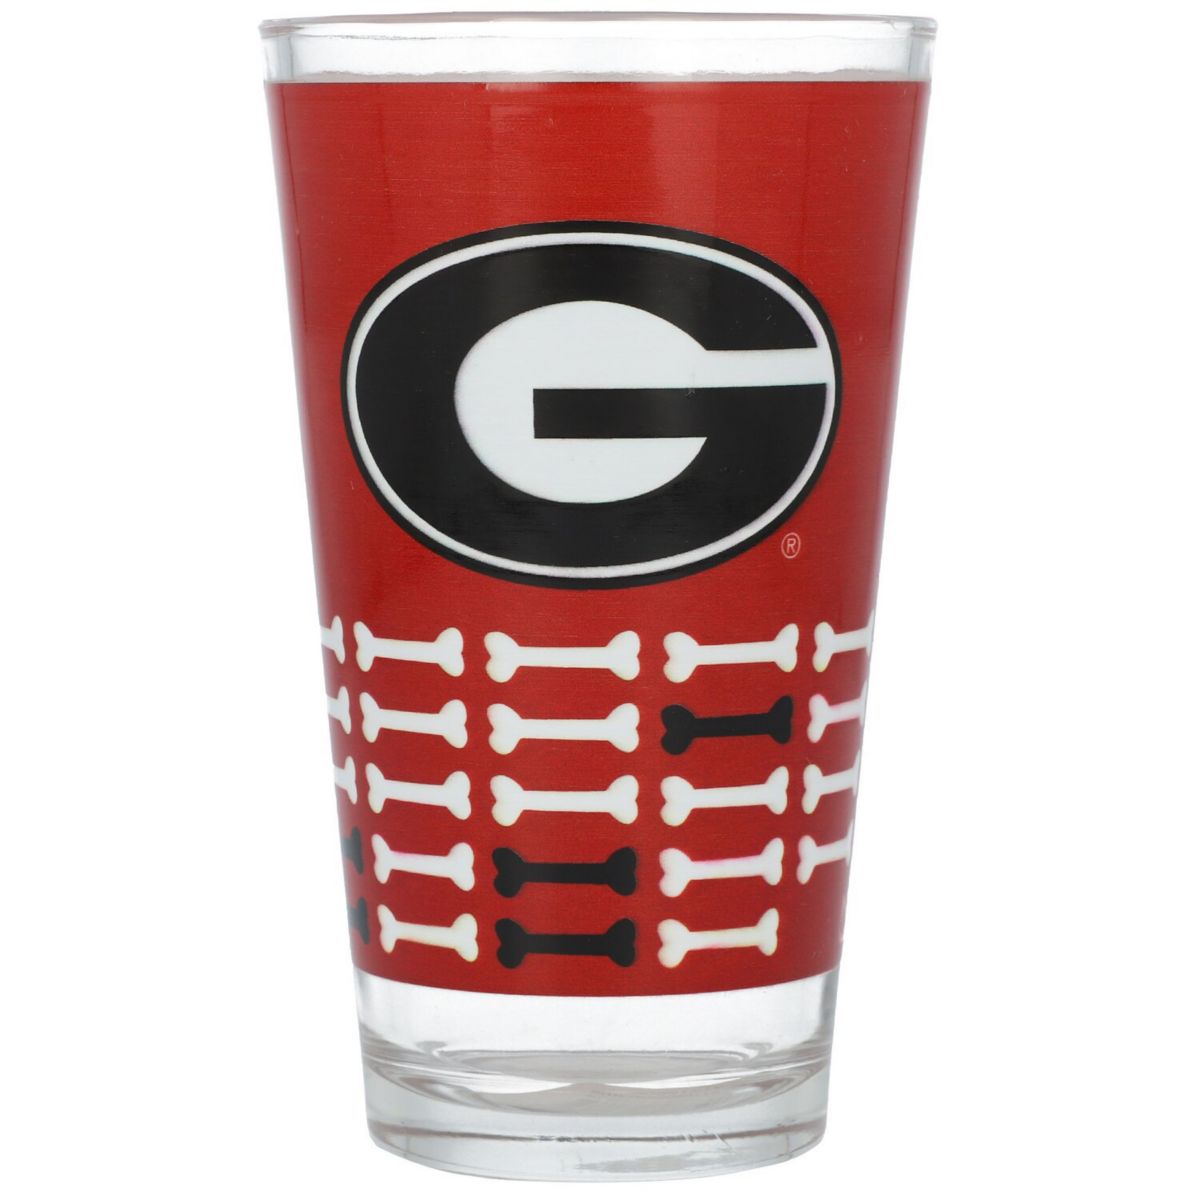 Georgia Bulldogs 16oz. Heritage Pint Glass Unbranded